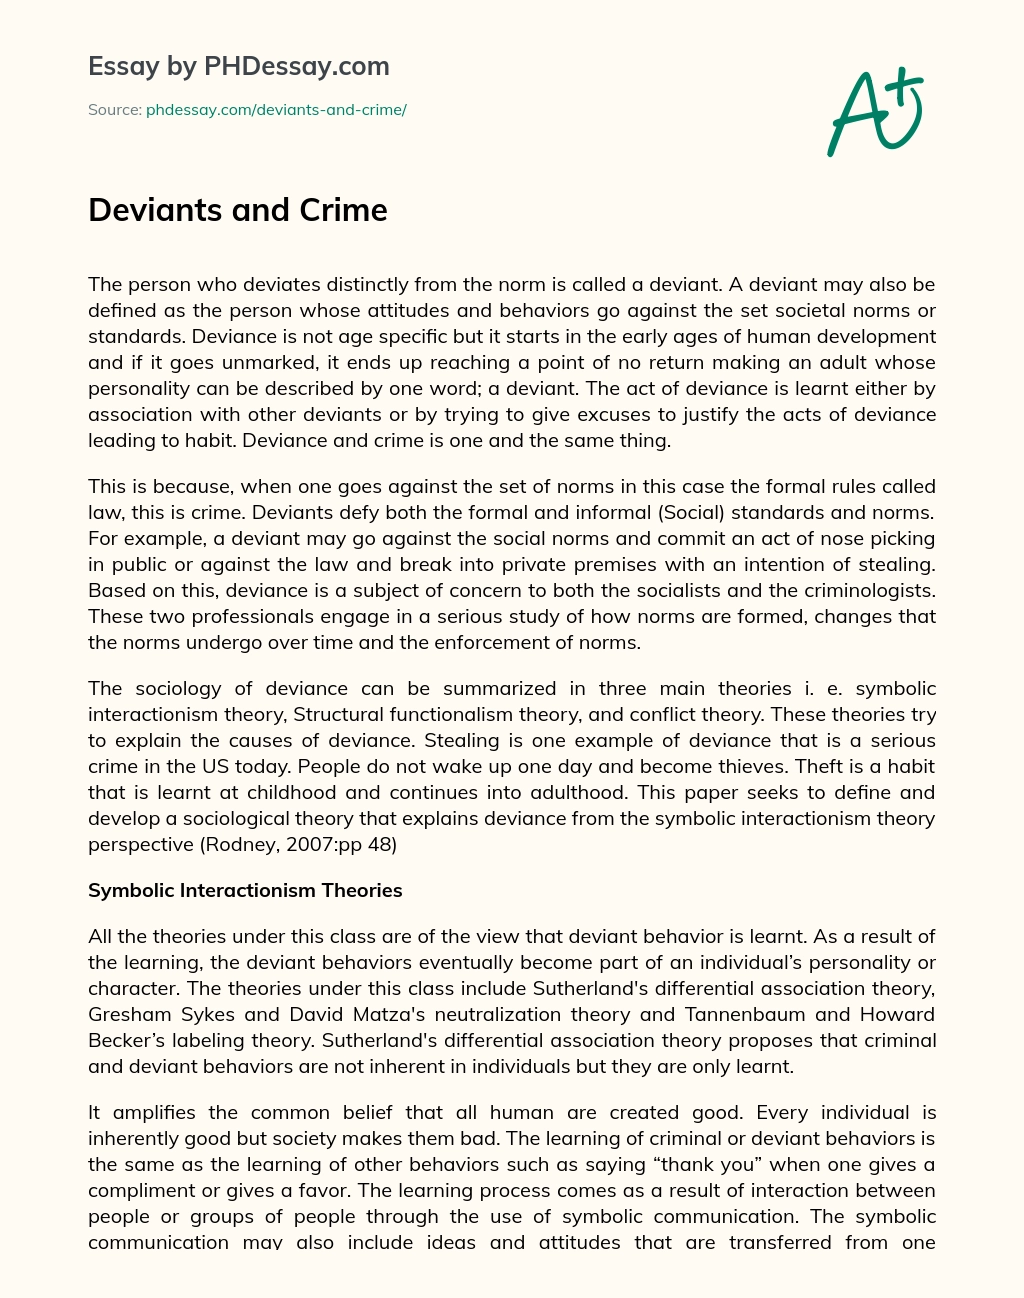 Deviants and Crime essay